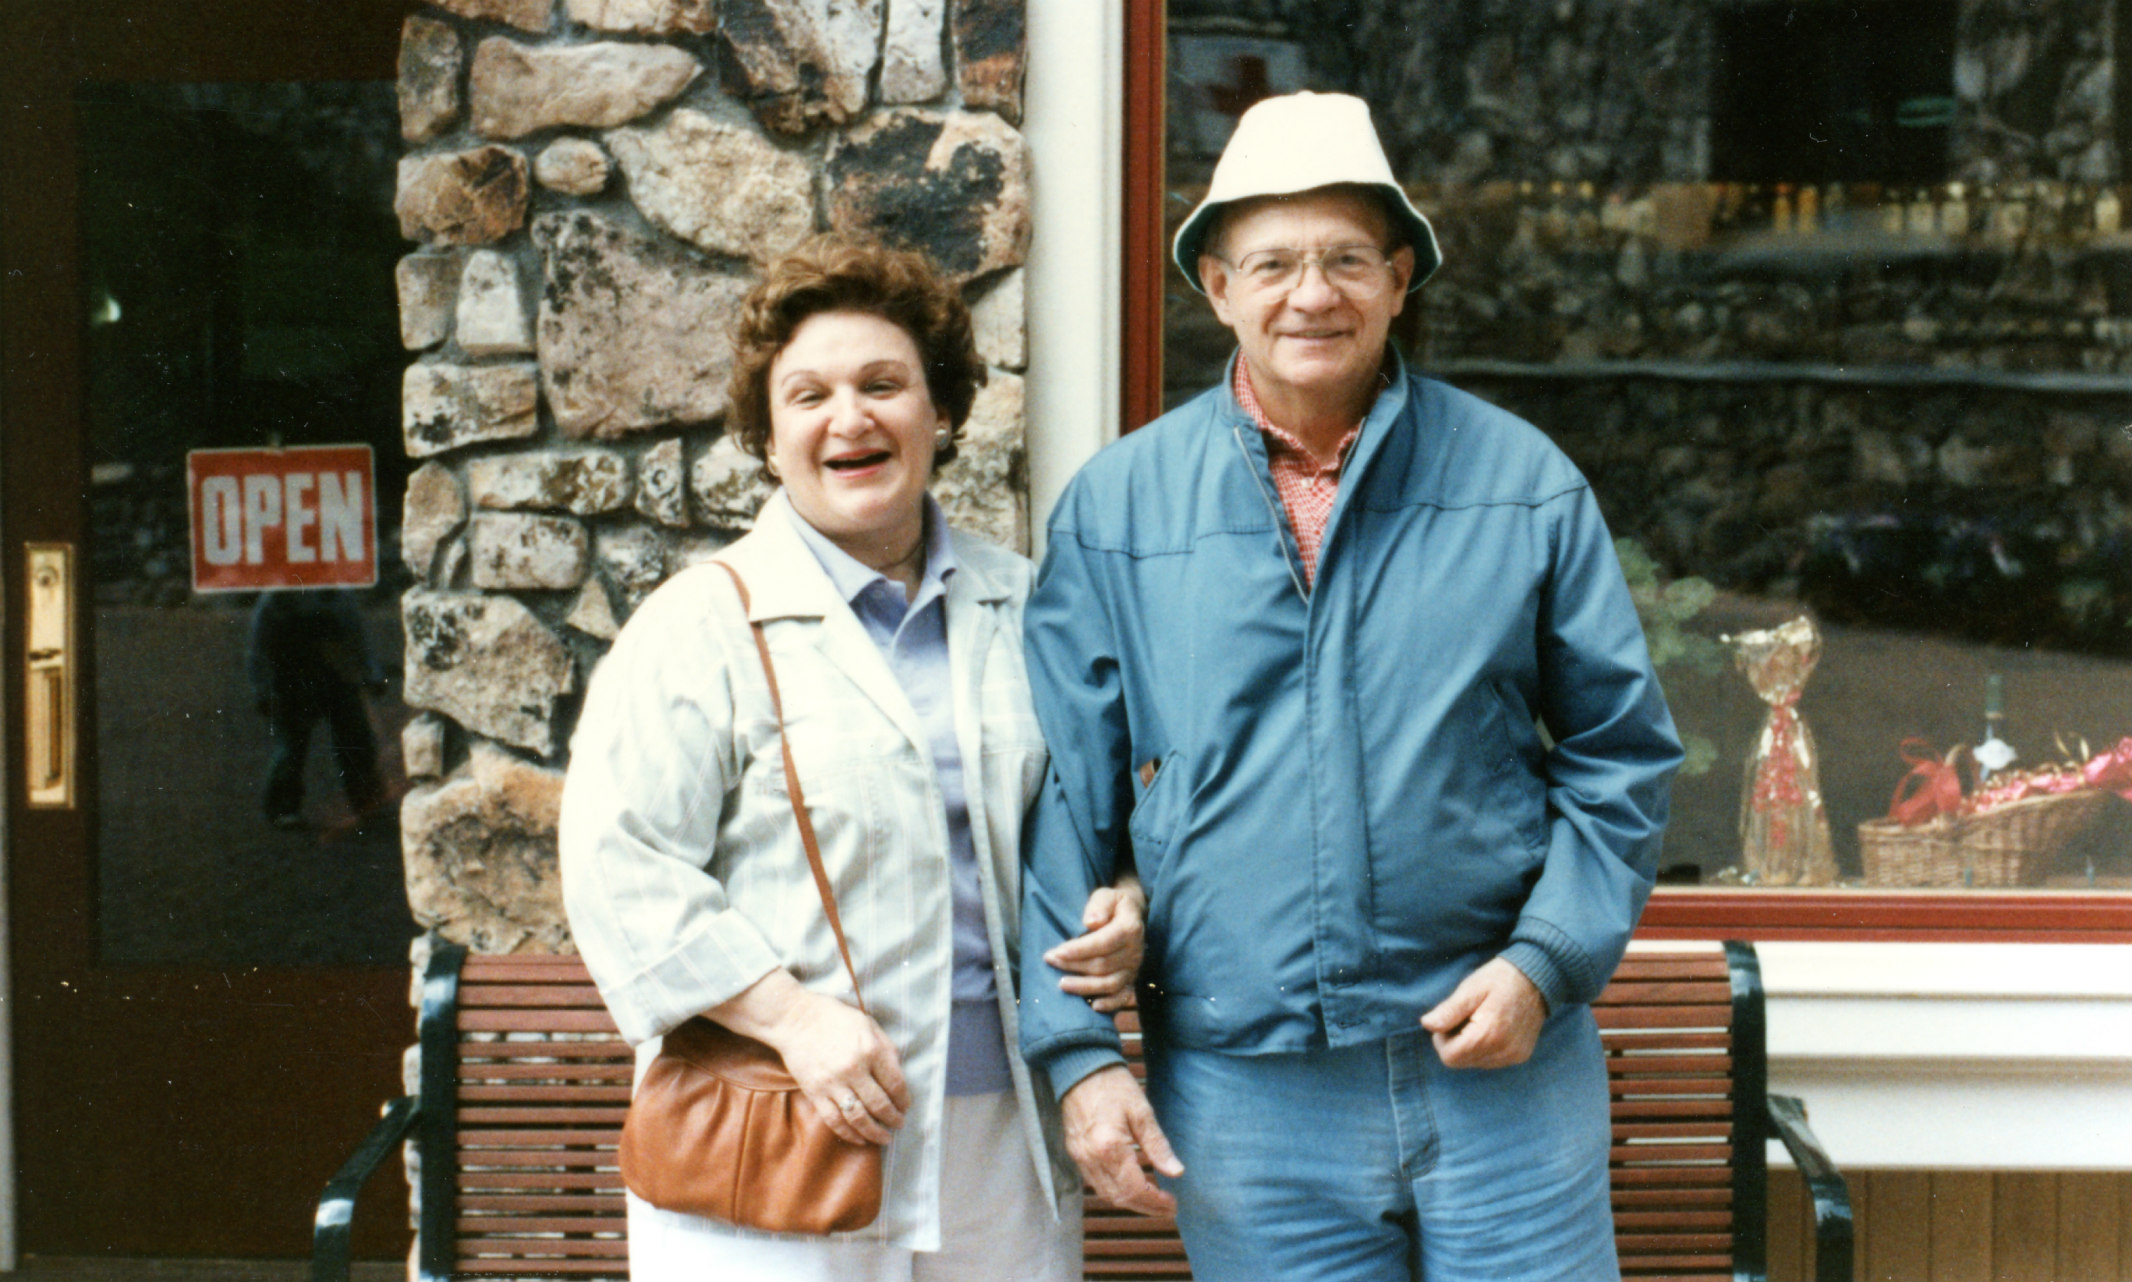 Bill and Doris Edelman